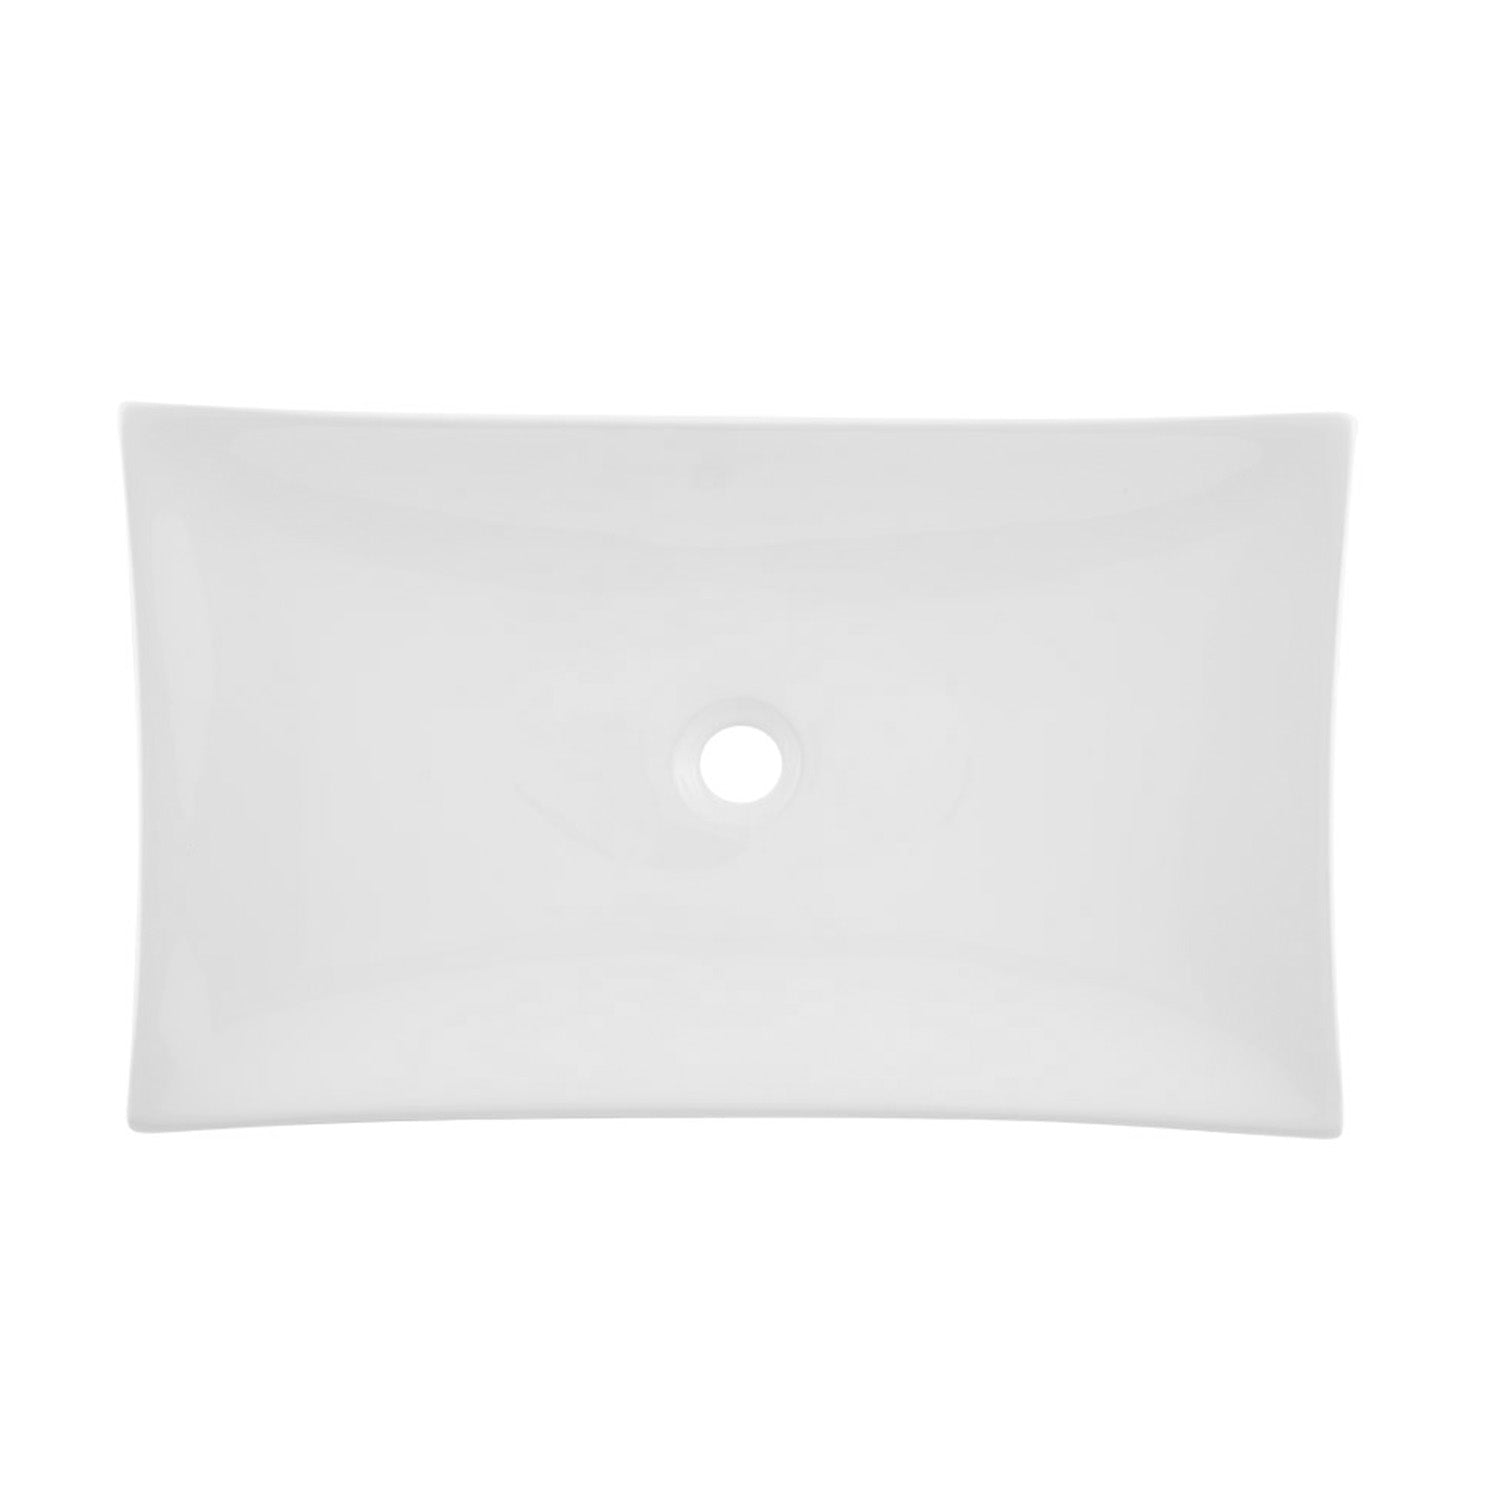 DAX Ceramic Rectangle Single Bowl Bathroom Vessel Sink, White Finish, 25-3/4 x 15-1/2 x 5-1/4 Inches (BSN-280B)